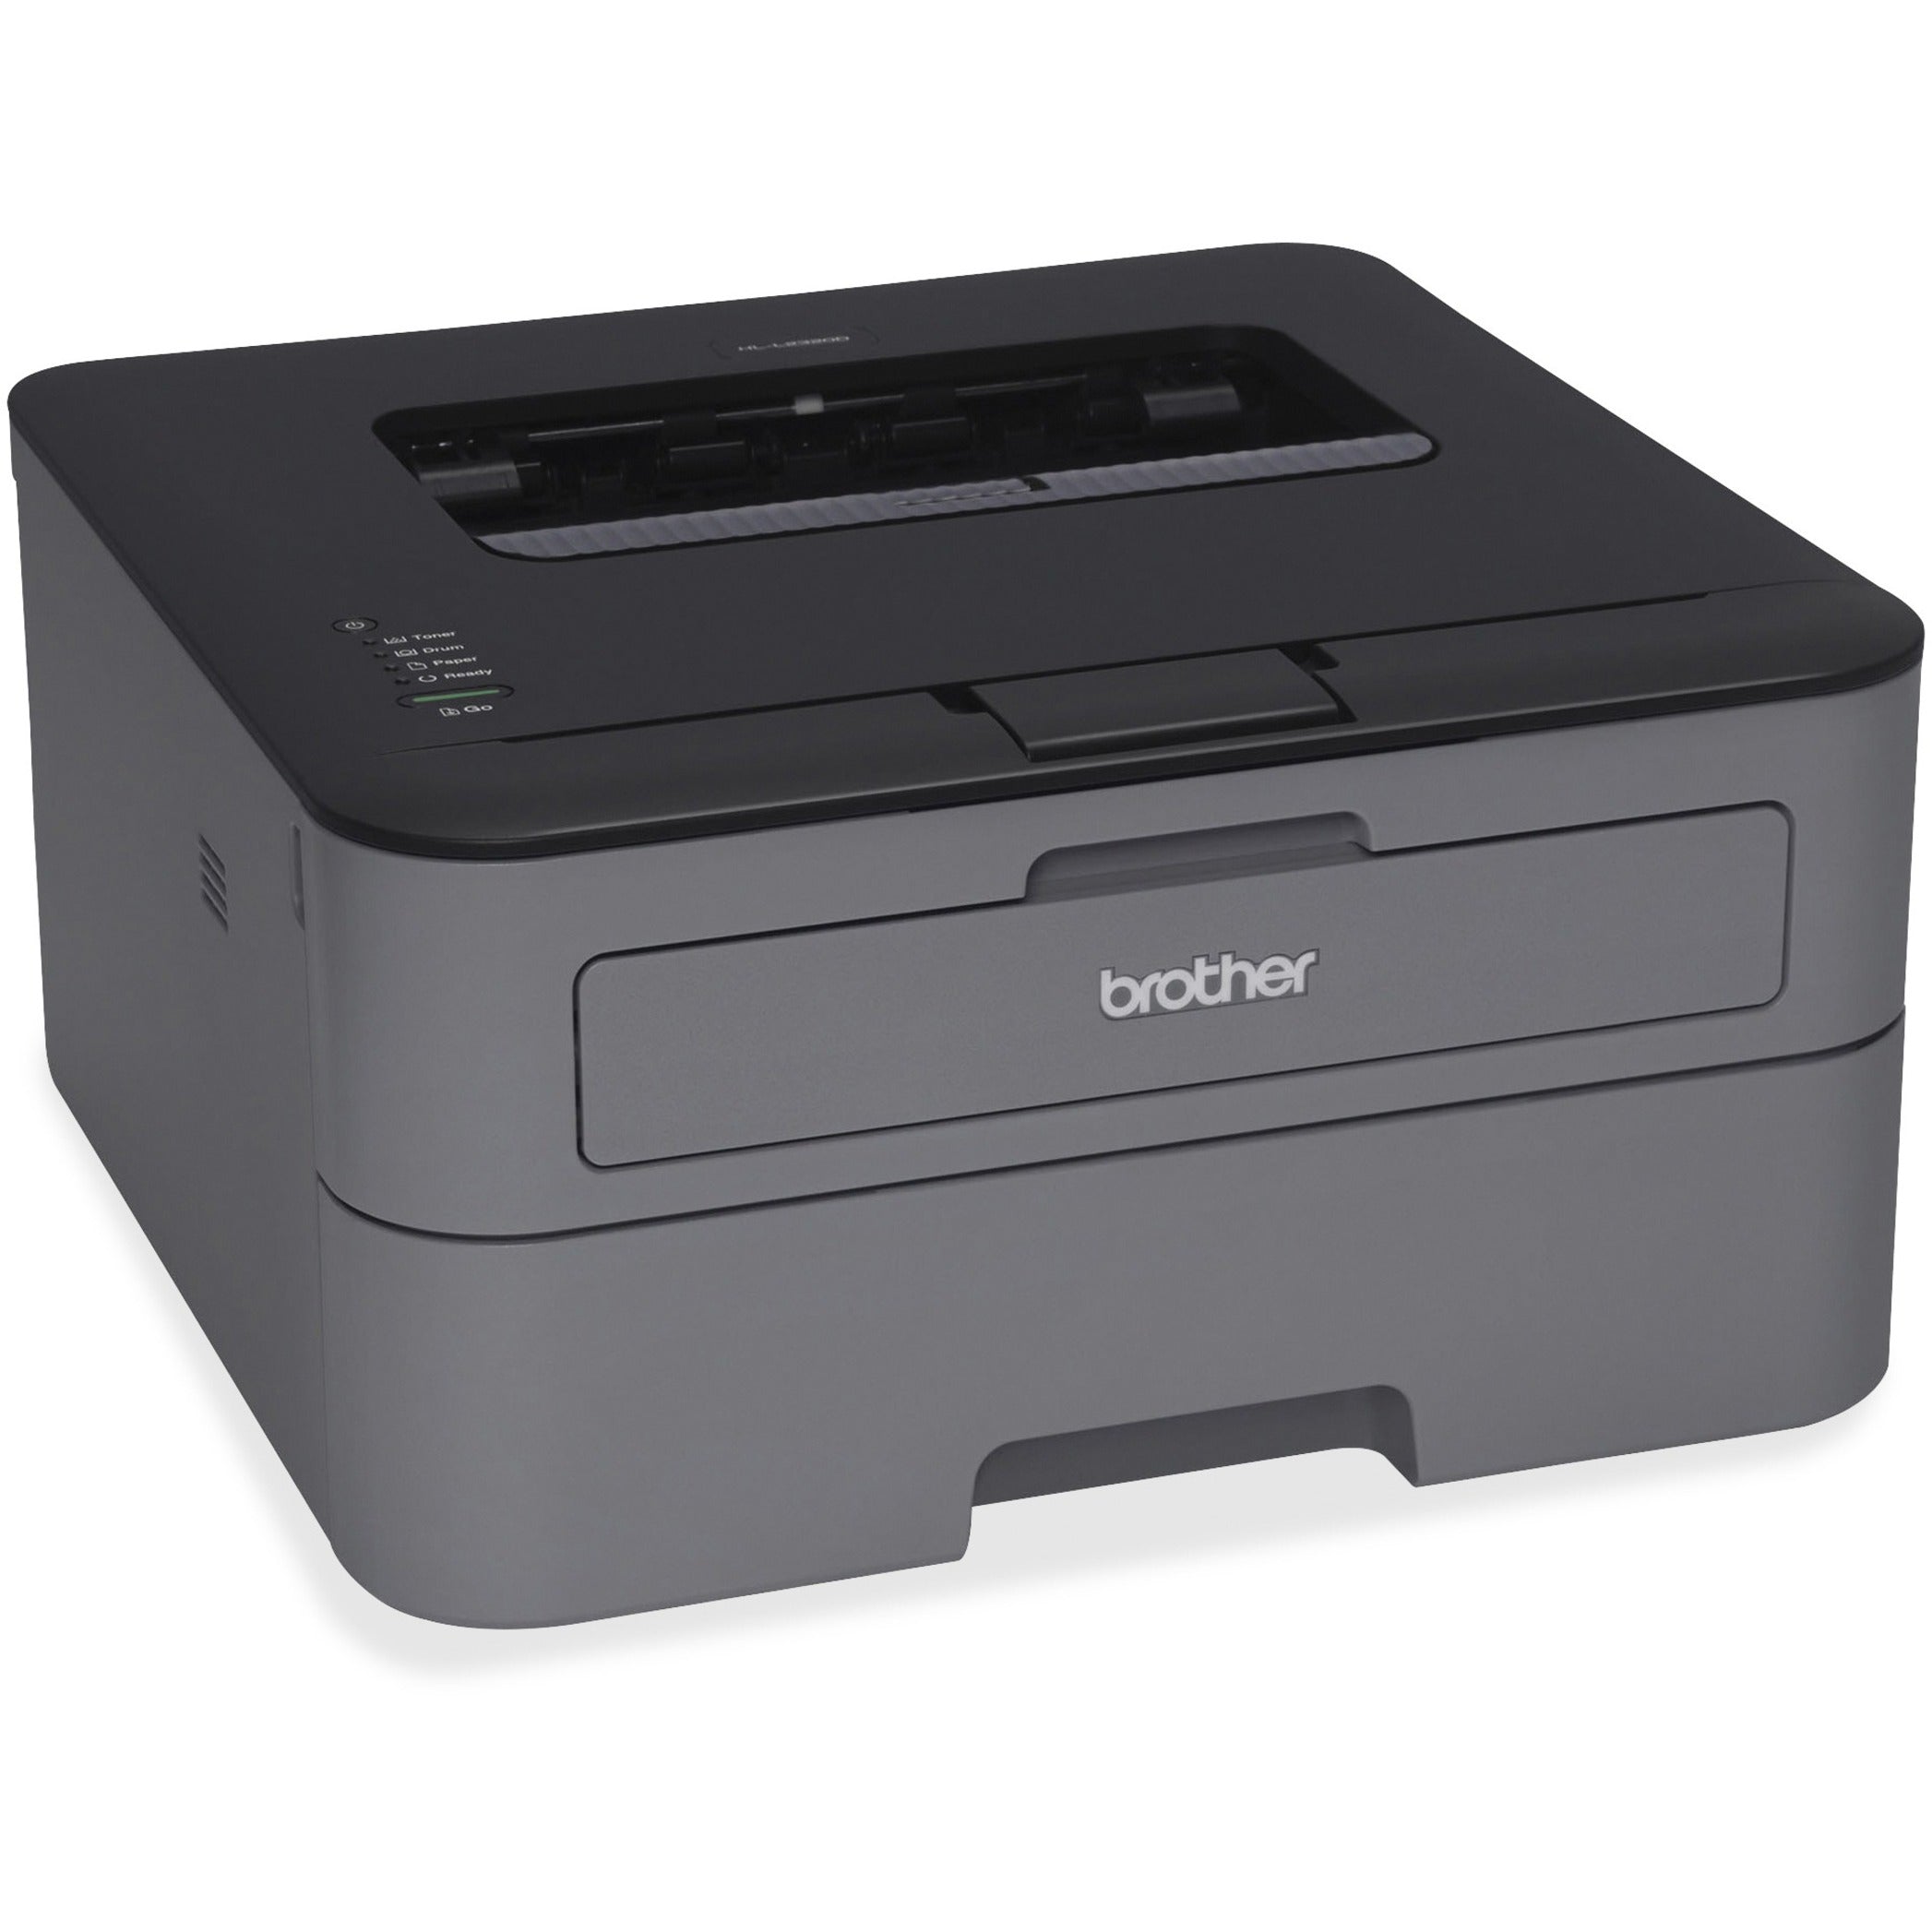 Brother HL-L2300D Monochrome Laser Printer, Duplex Printing, USB 2.0, 26 ppm